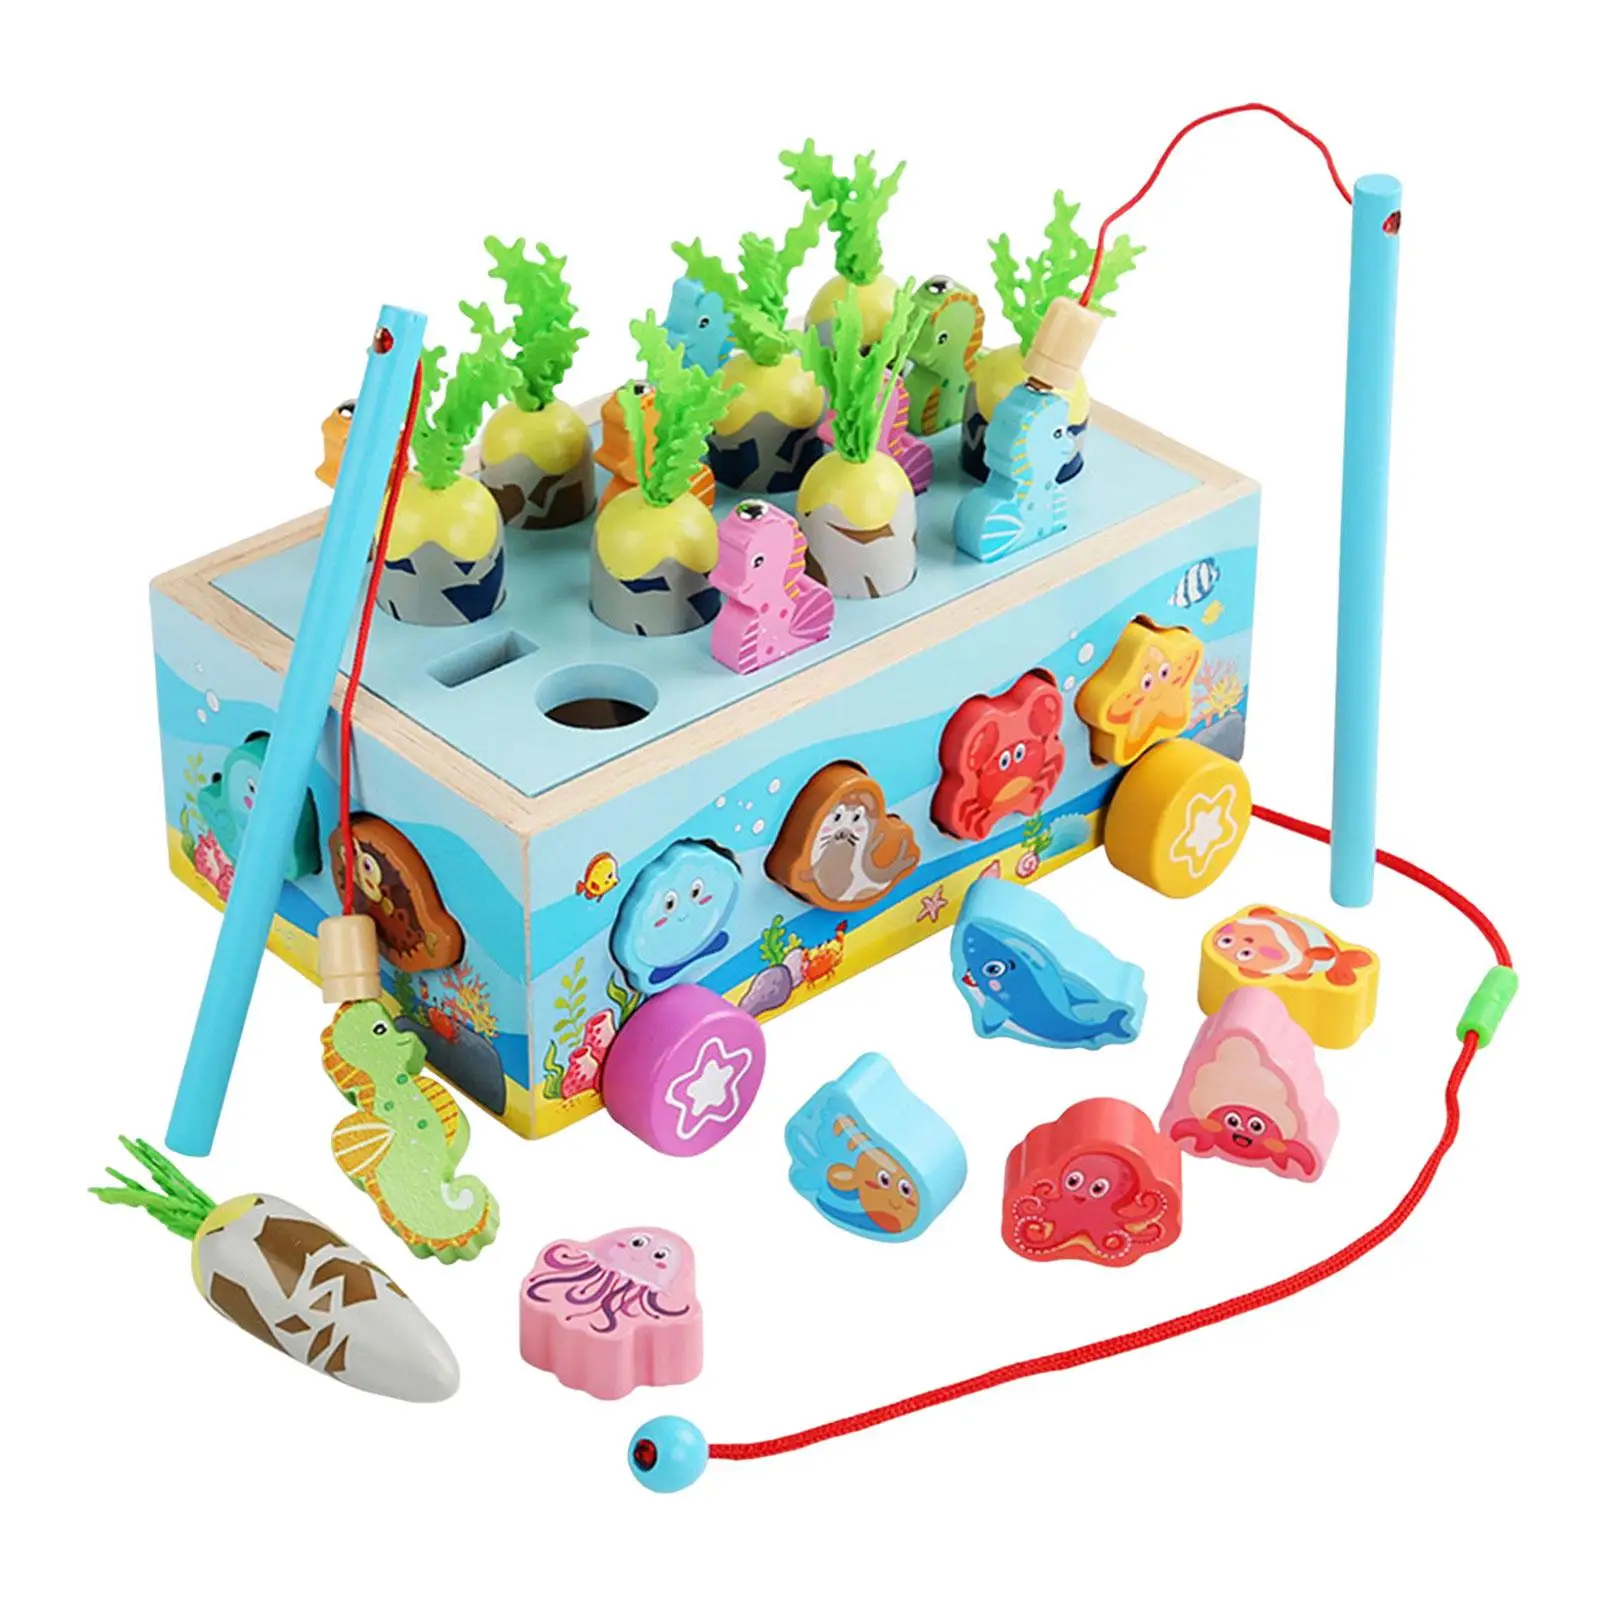 Montessori Wooden Shape Sorter Toys Preschool Learning Toys Fishing Game Car with Animal Blocks for Toddler Kids Birthday Gift